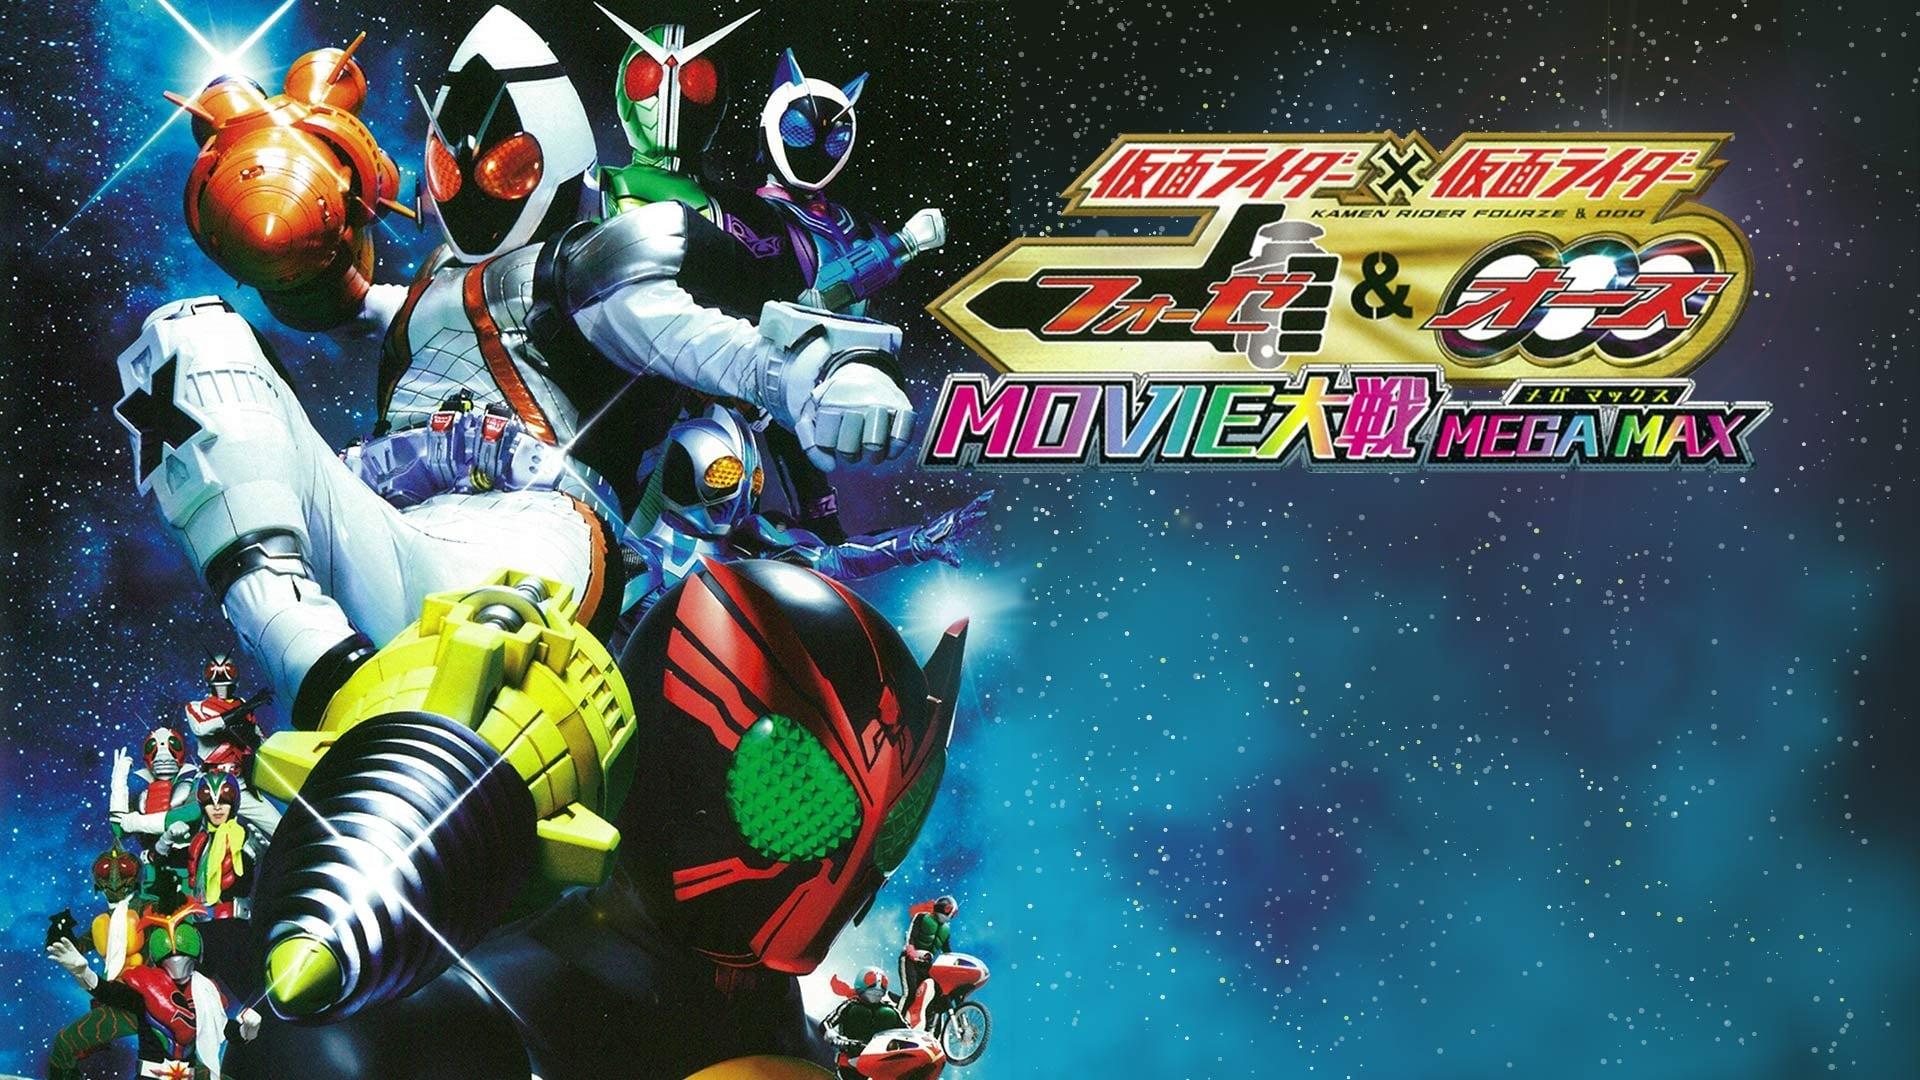 Kamen Rider x Kamen Rider Fourze & OOO Movie Wars Mega Max backdrop